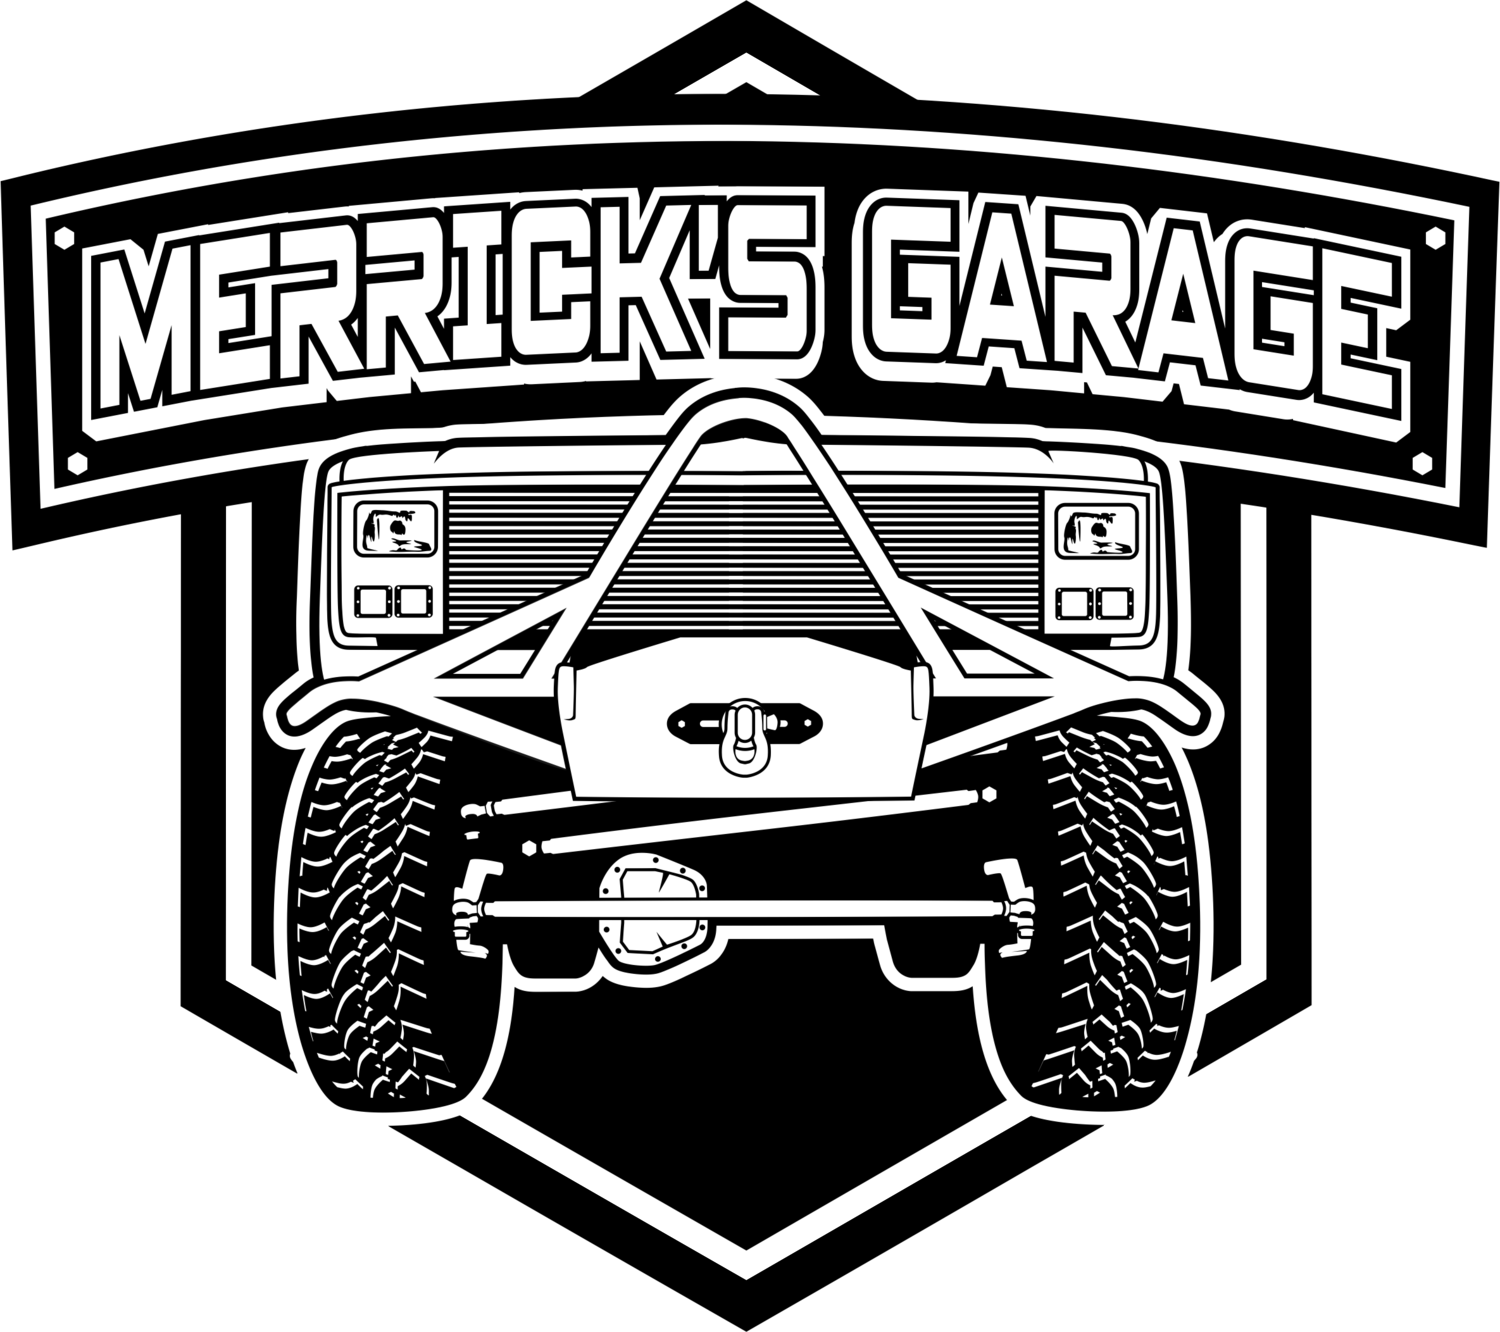 www.merricksgarage.com